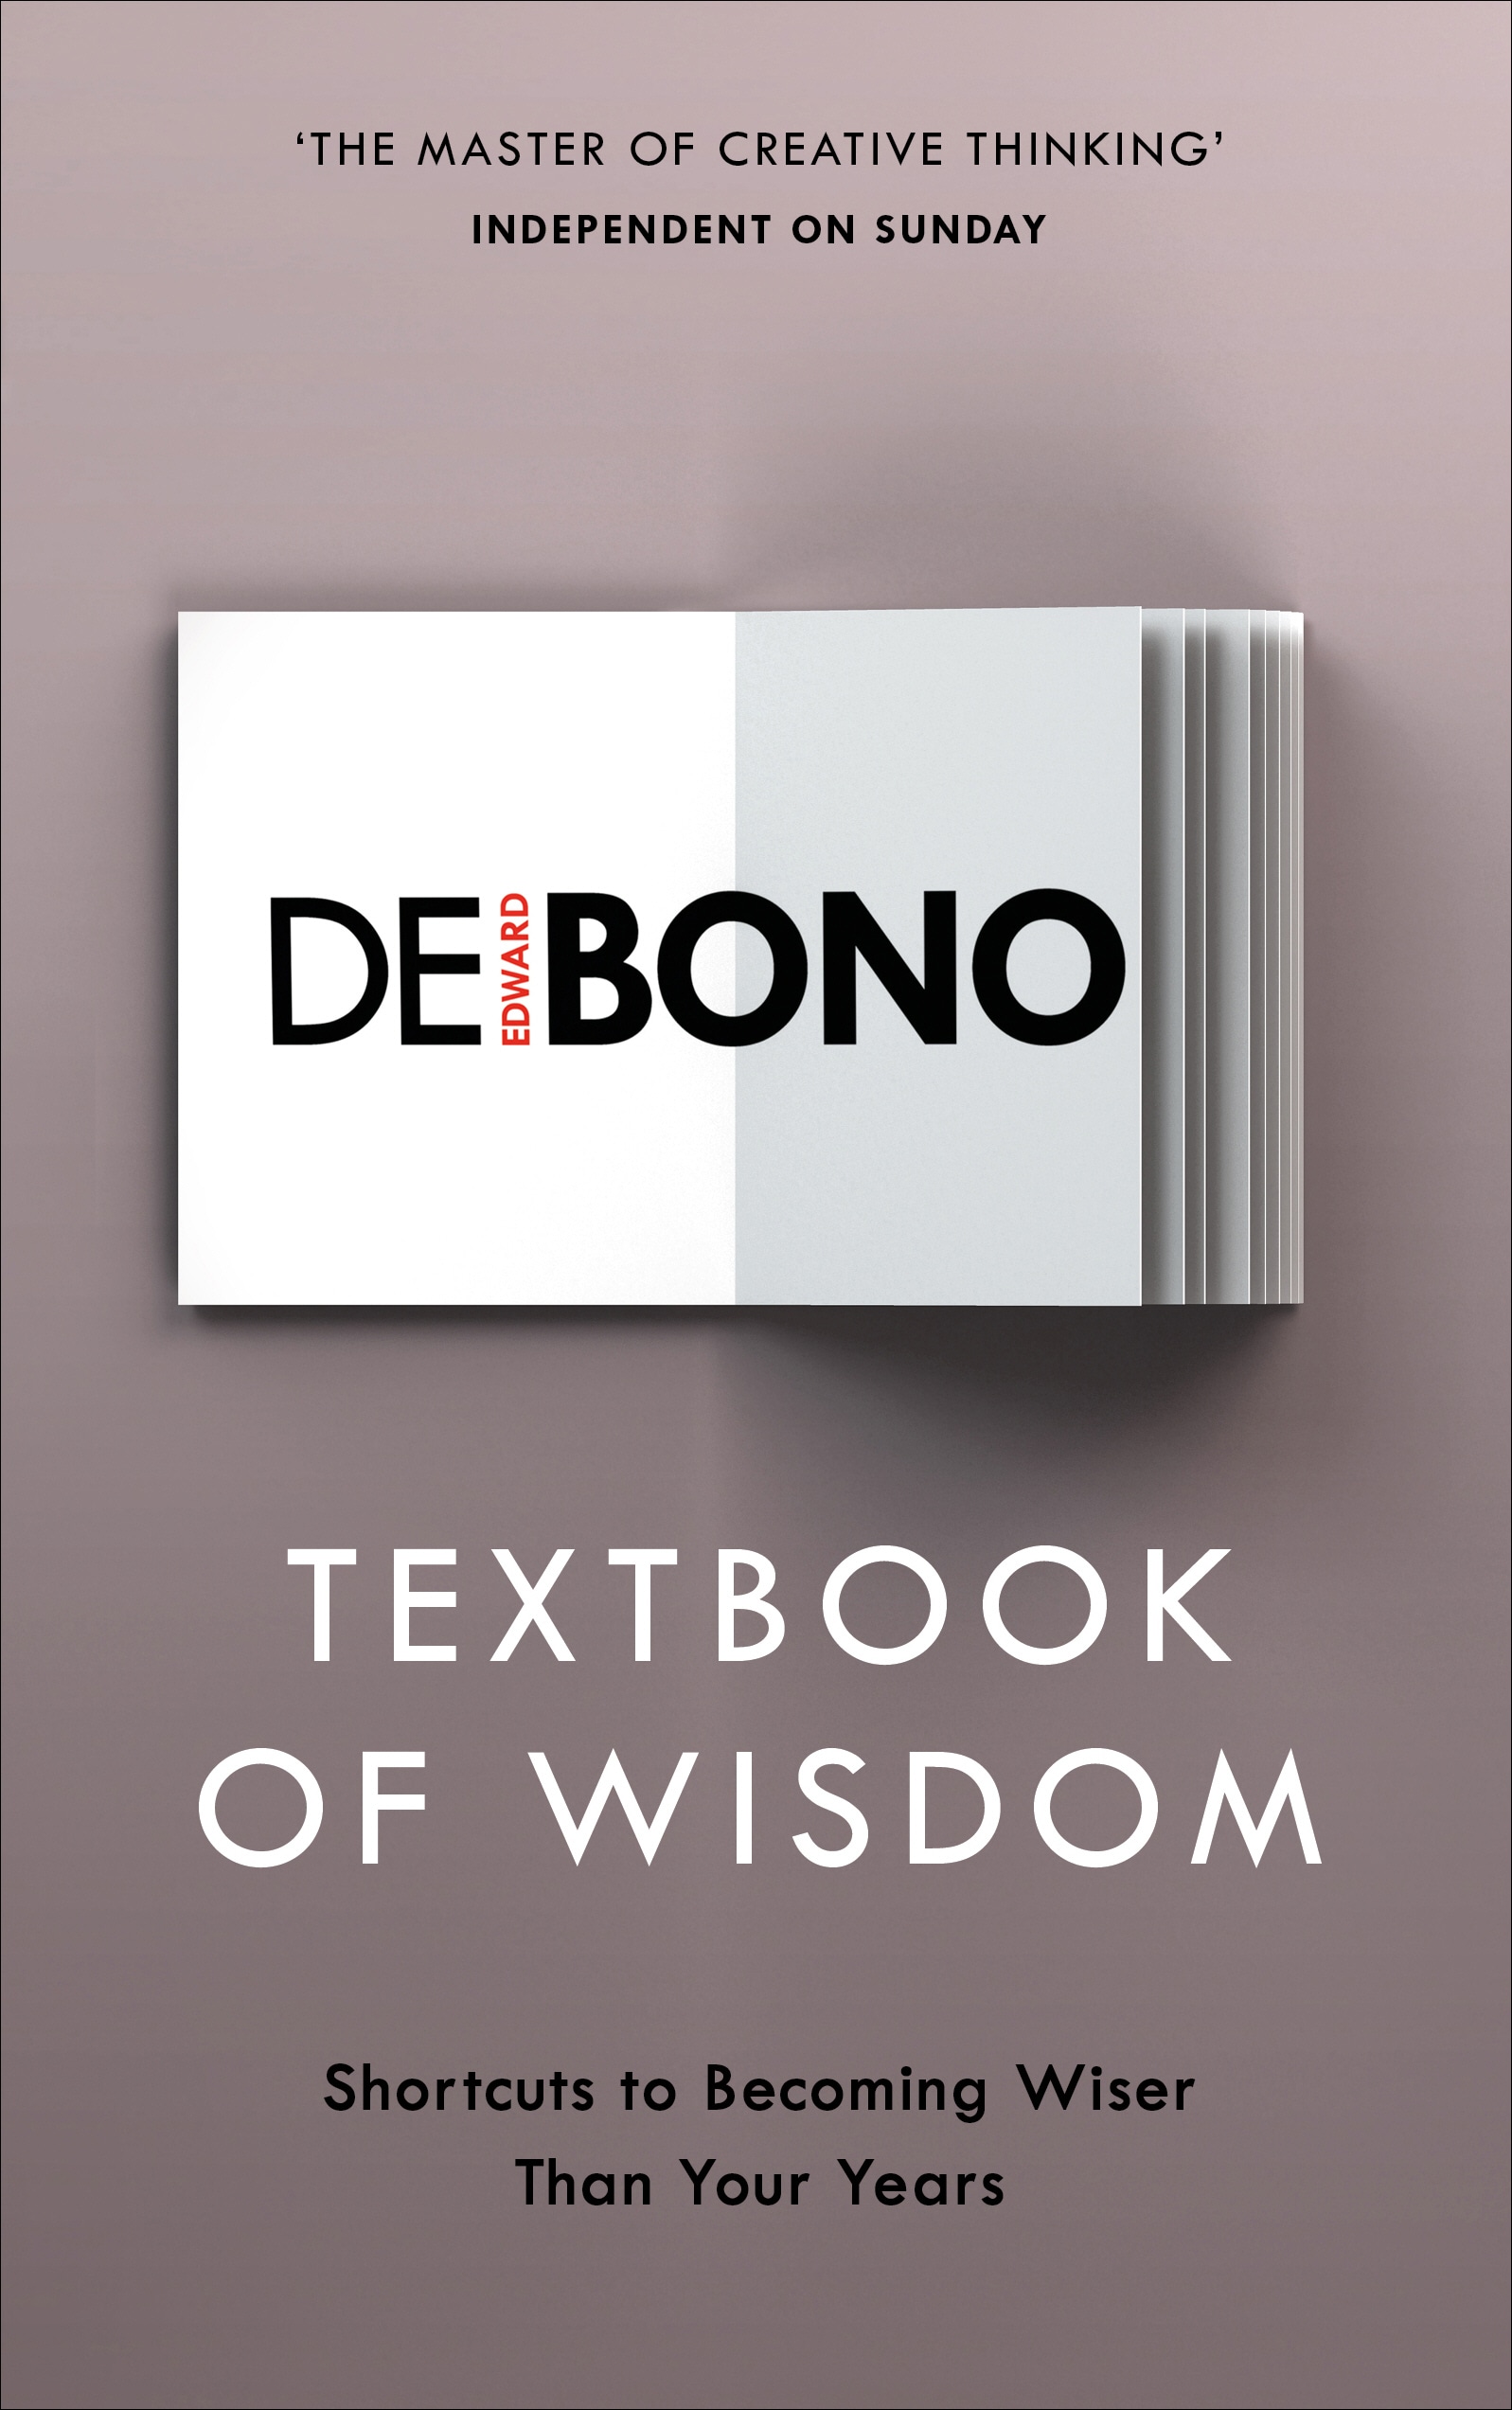 Book “Textbook of Wisdom” by Edward de Bono — April 4, 2019